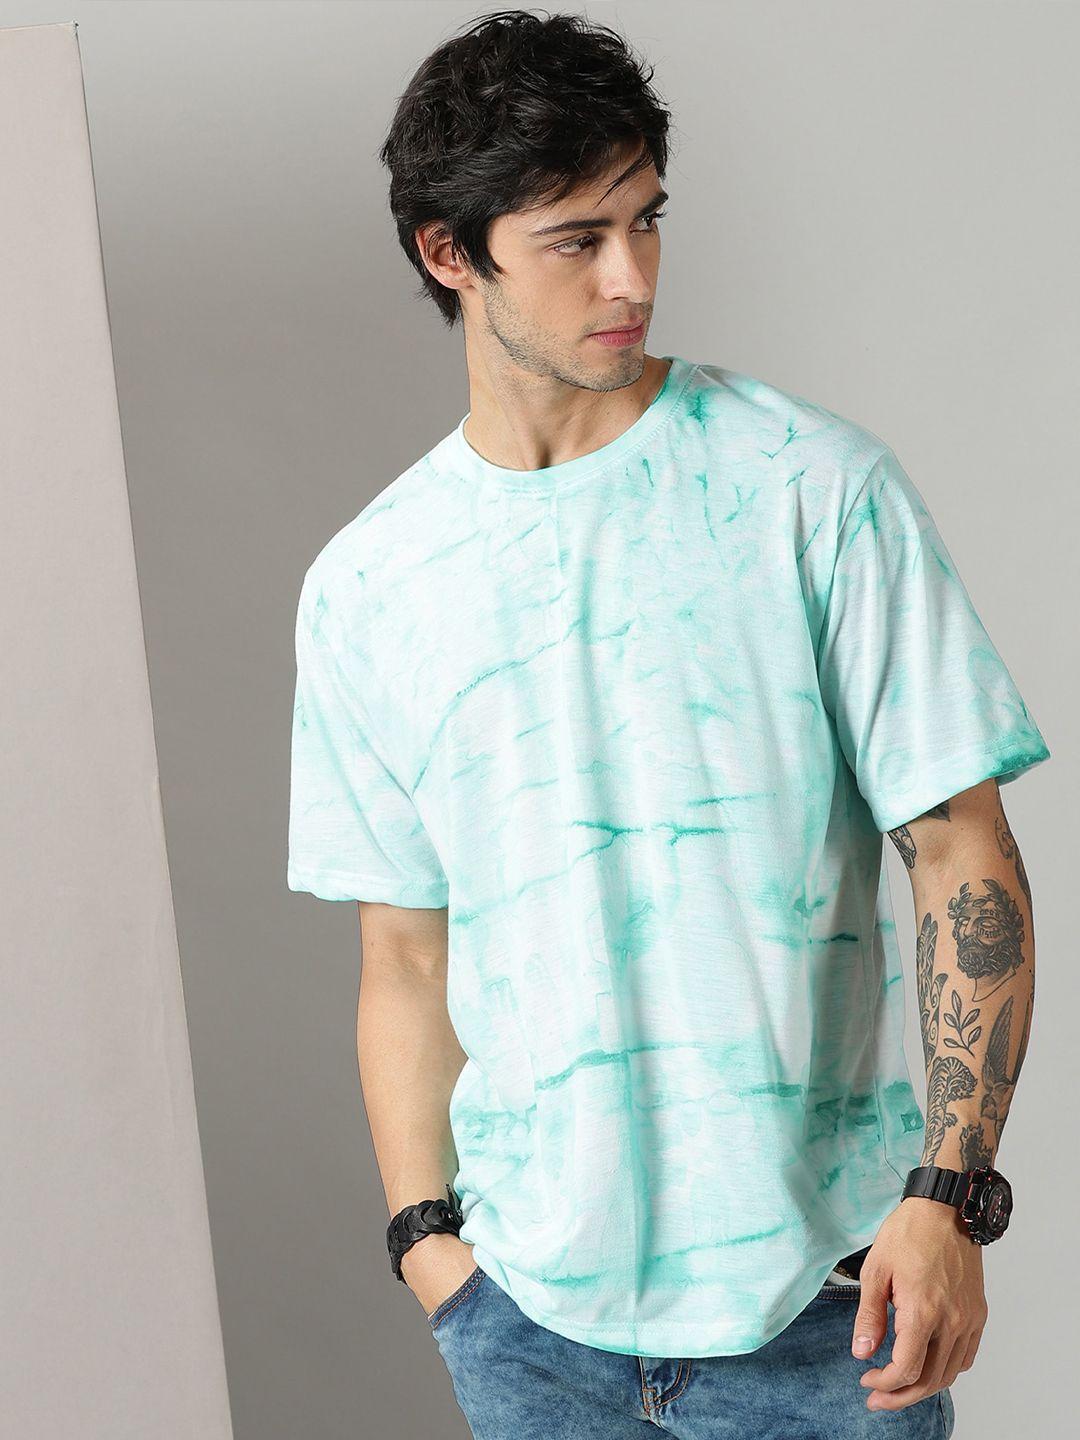 rodzen tie & dye dyed pure cotton loose t-shirt